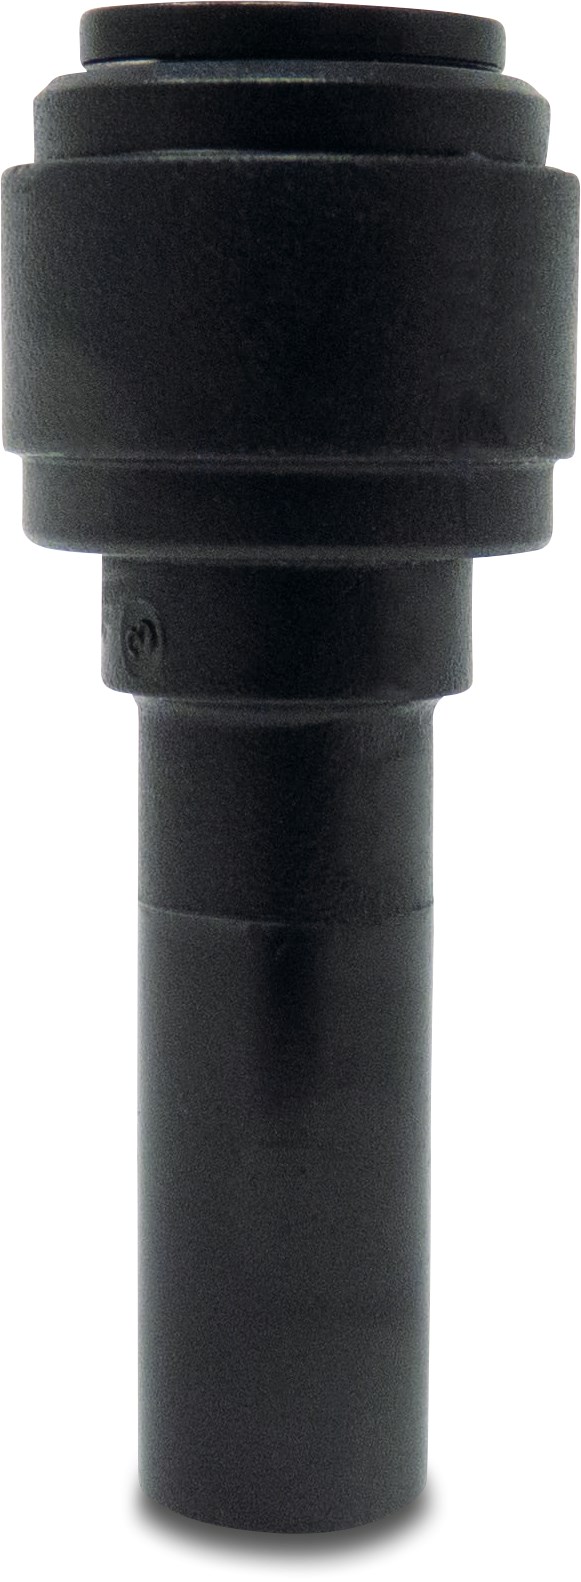 Reducer socket POM 6 mm x 4 mm spigot x push-in 20bar black WRAS type Aquaspeed